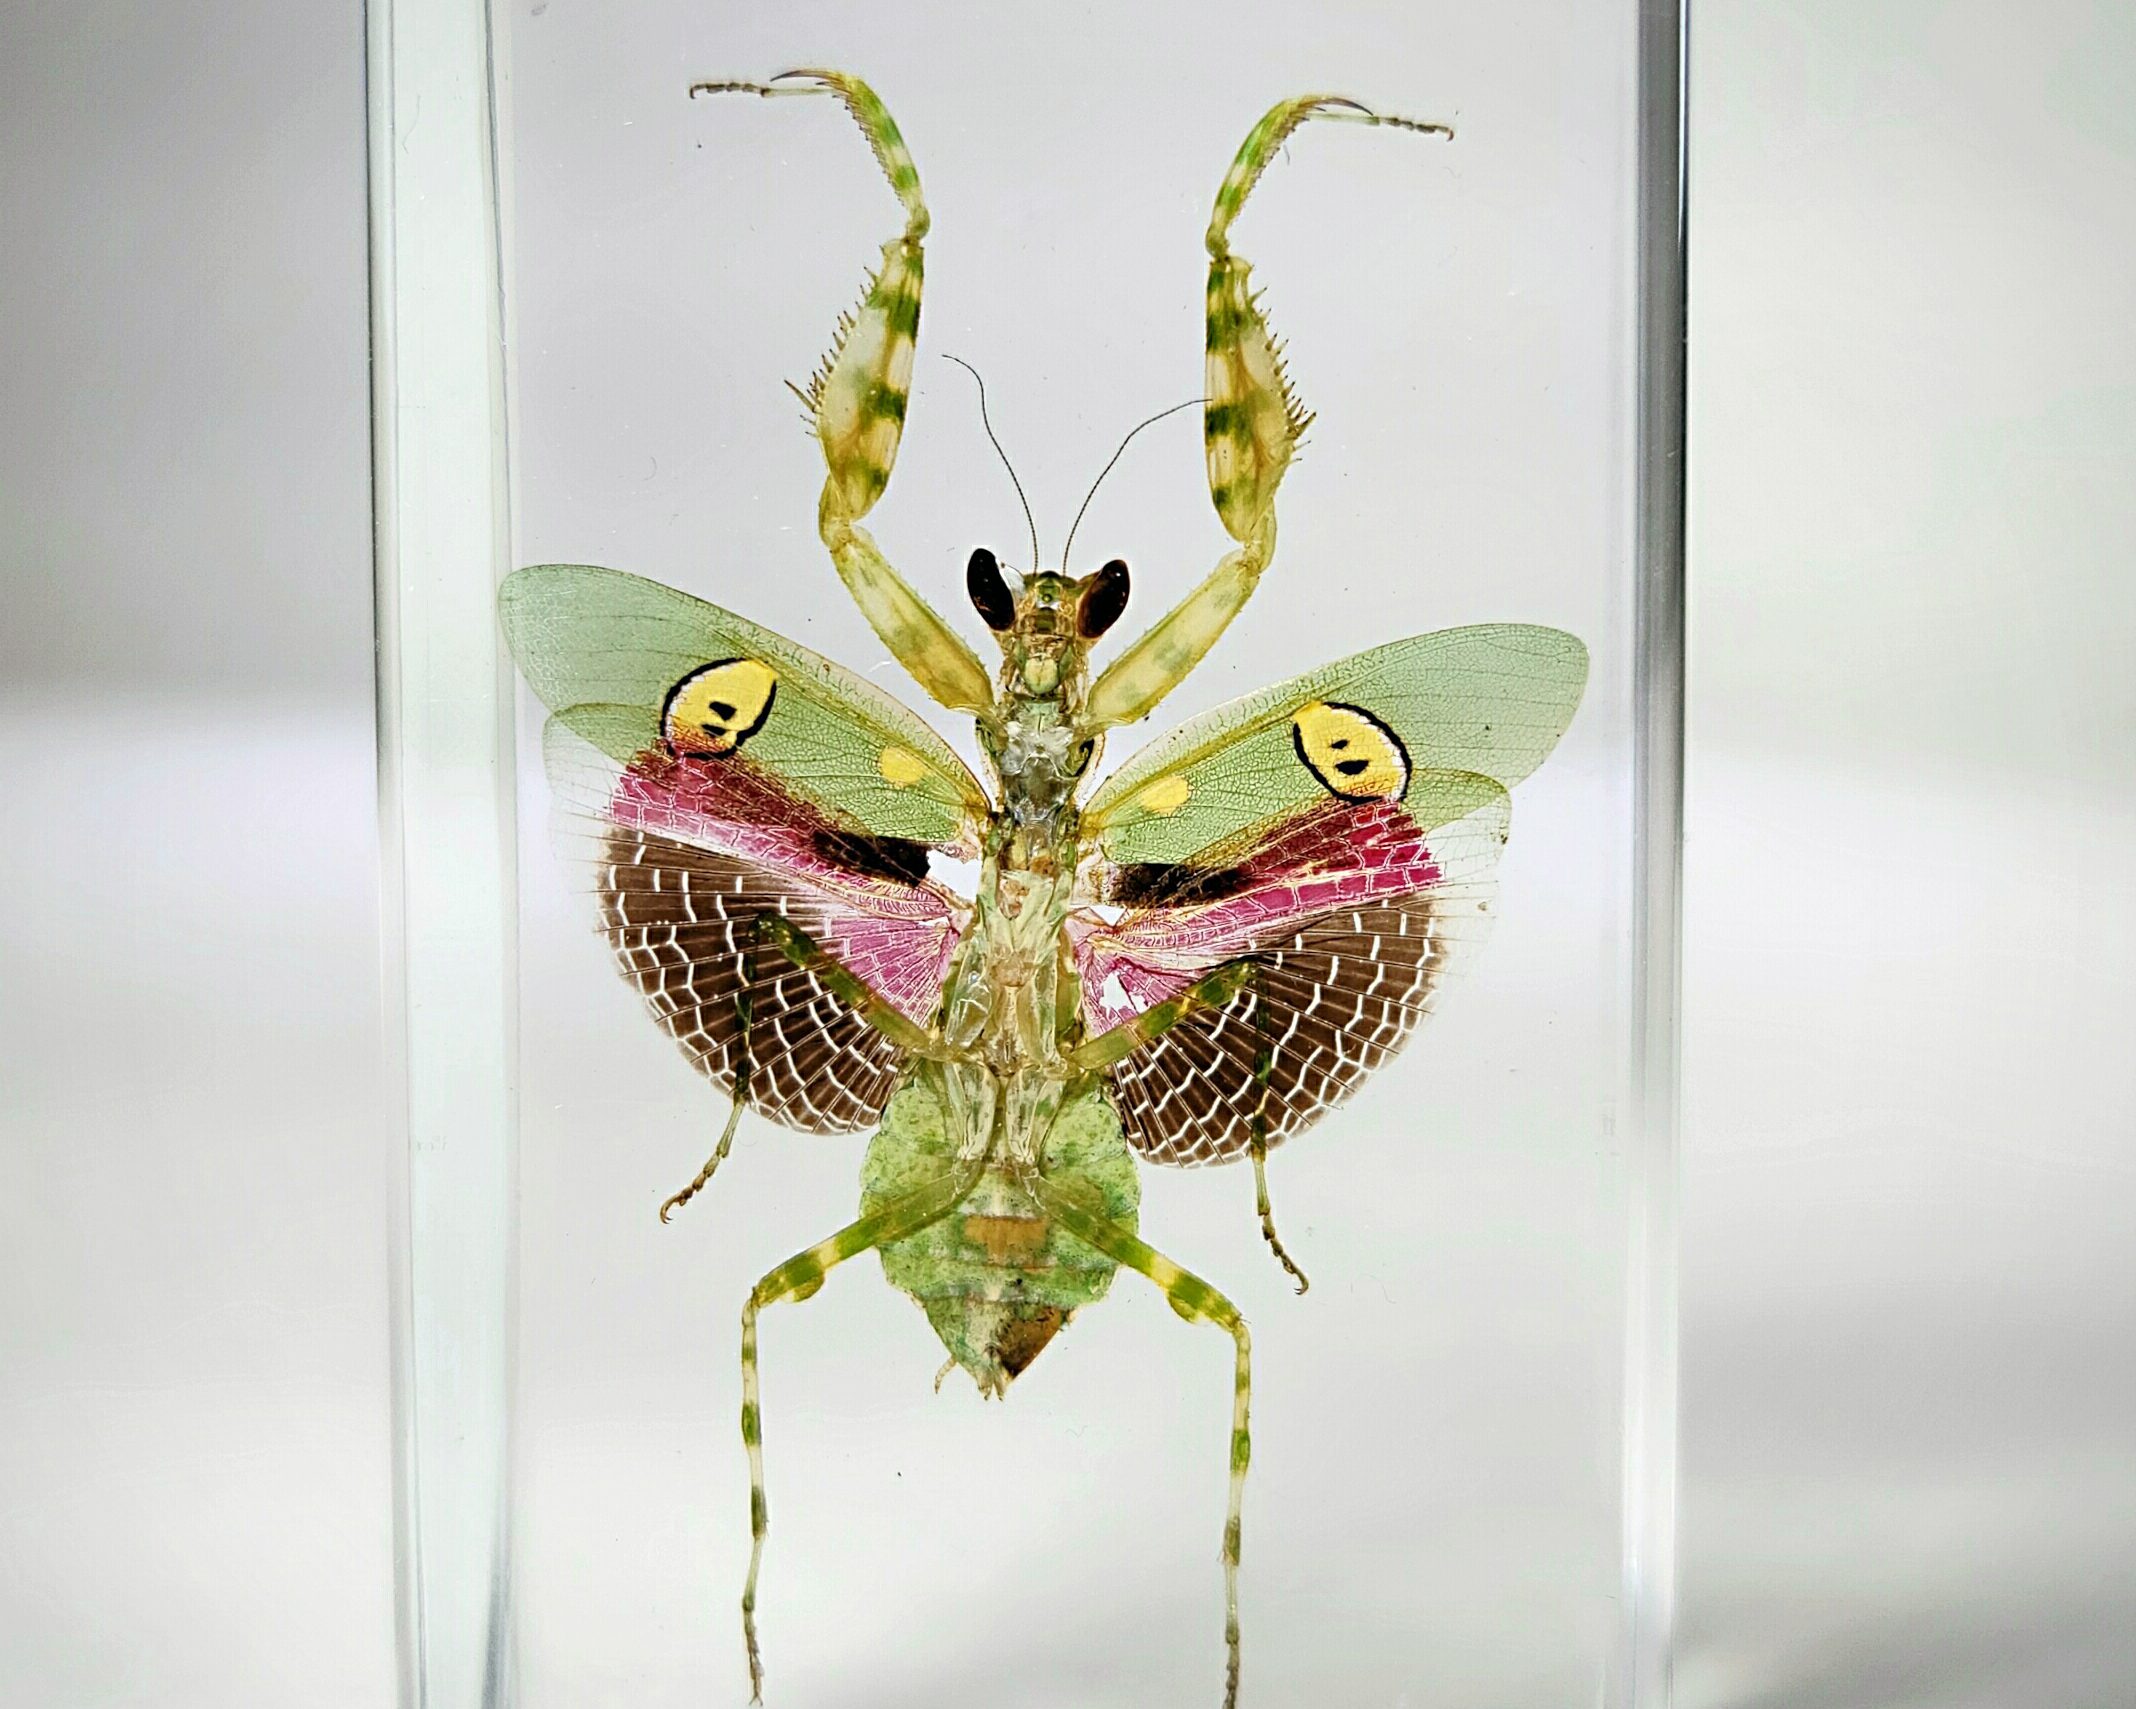 Real Jeweled Flower Praying Mantis Creobroter Gemmatus Female Insect 